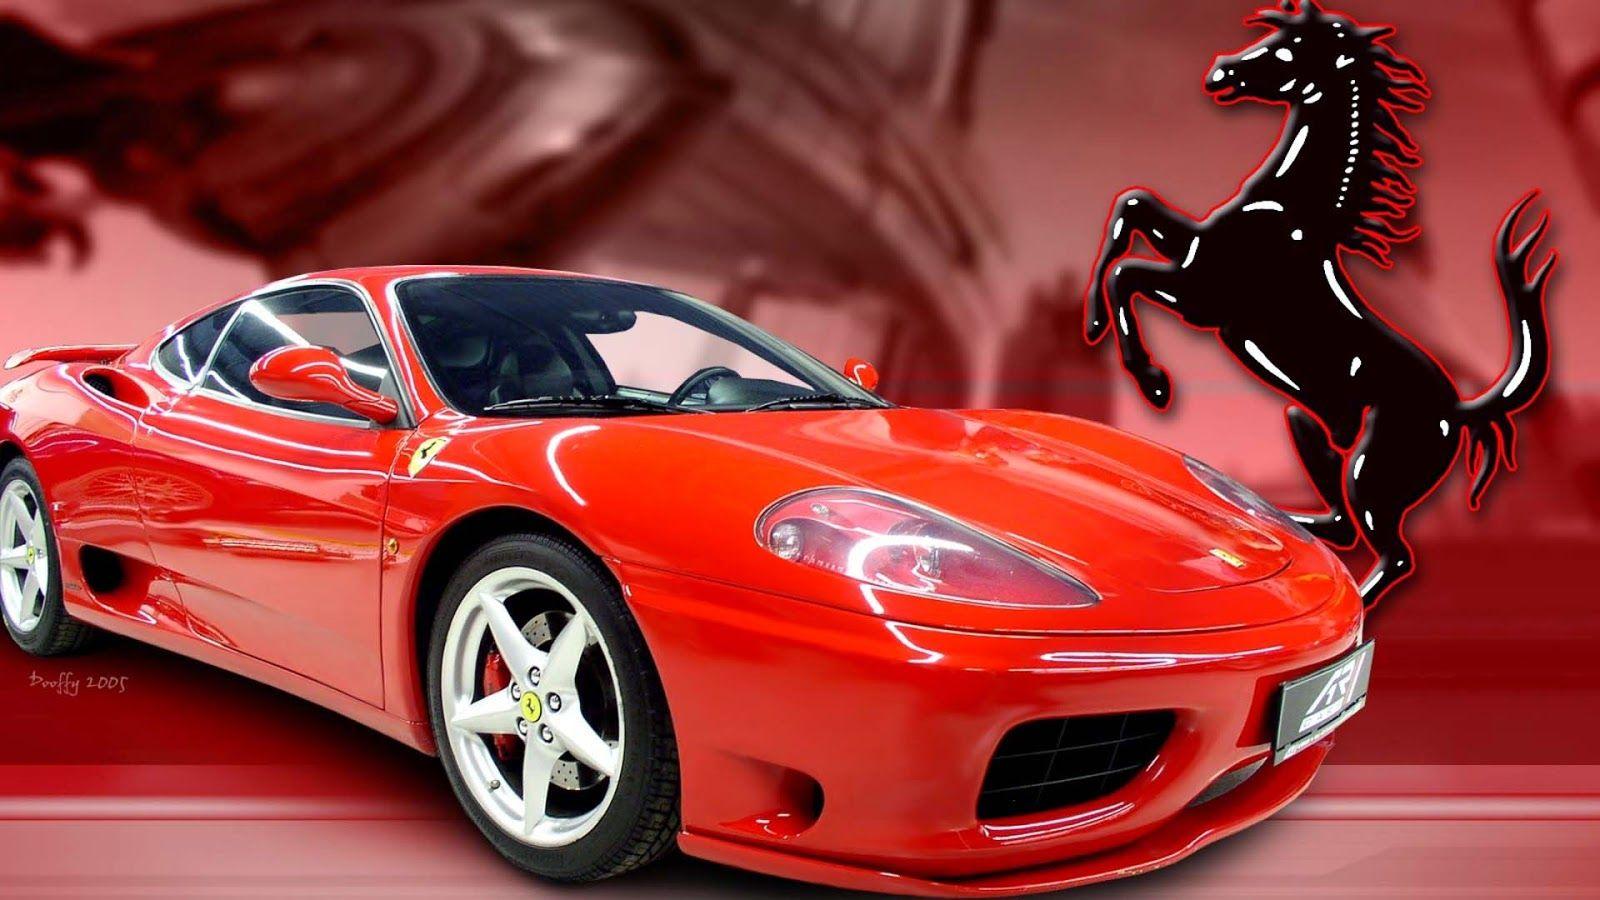 HD Wallpaper Desktop: Ferrari Cars Wallpaper